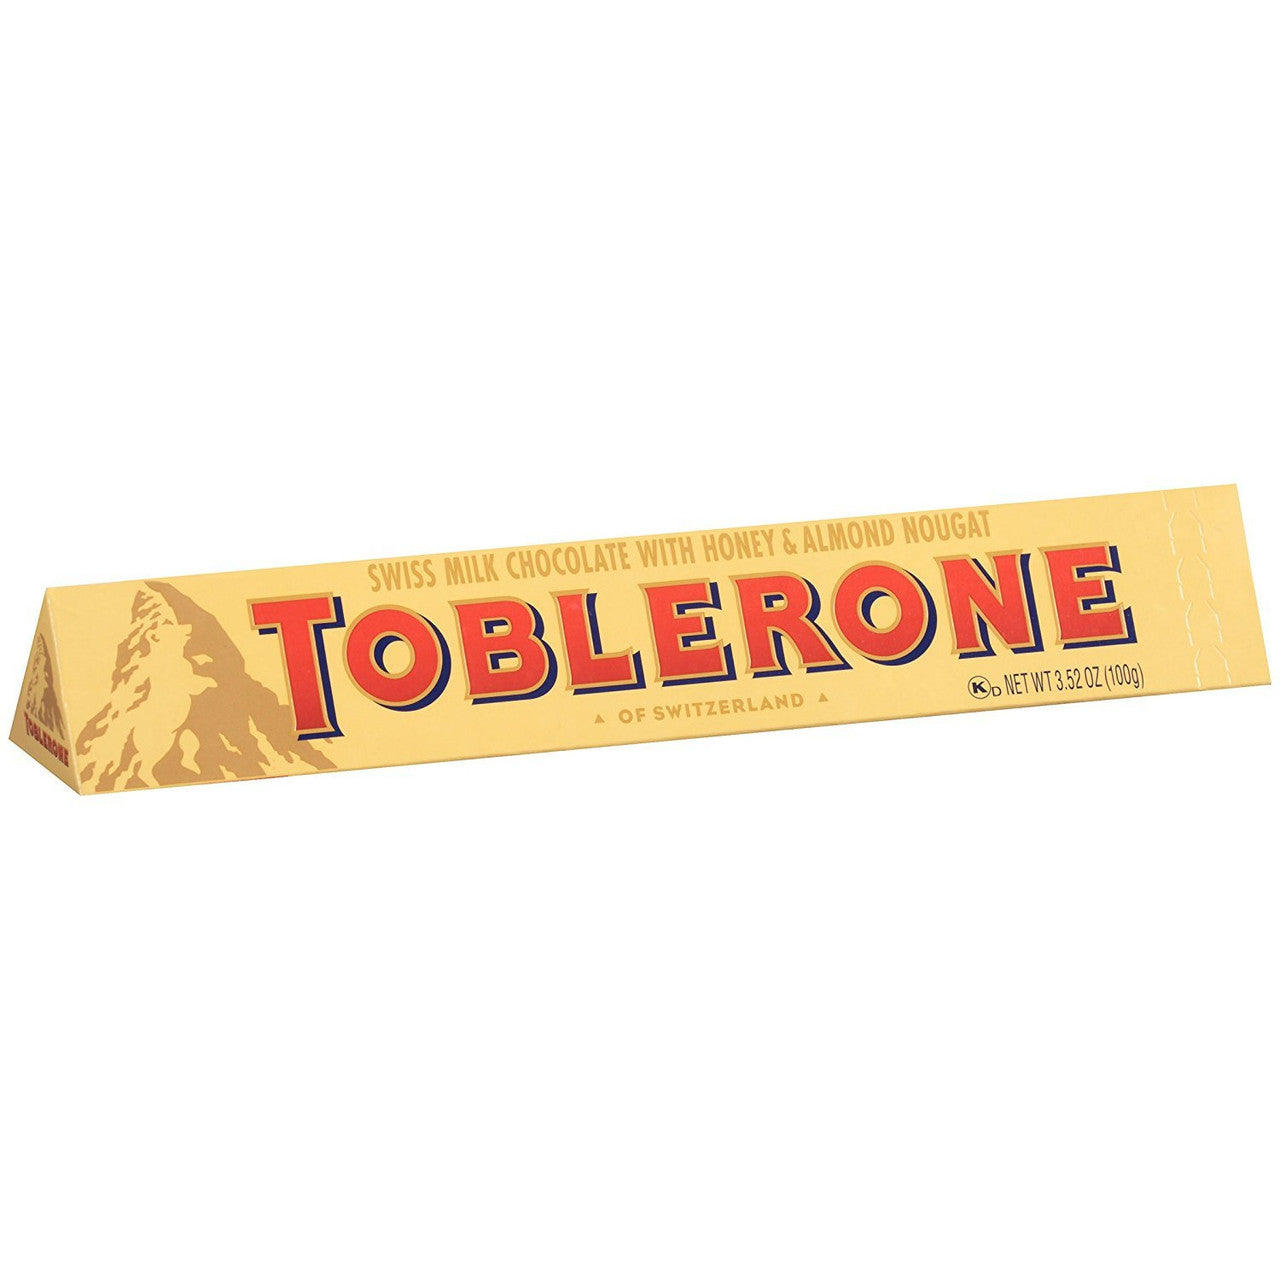 Toblerone Milk Chocolate With Honey & Almond Nougat 750g (26.5oz) - Canadian